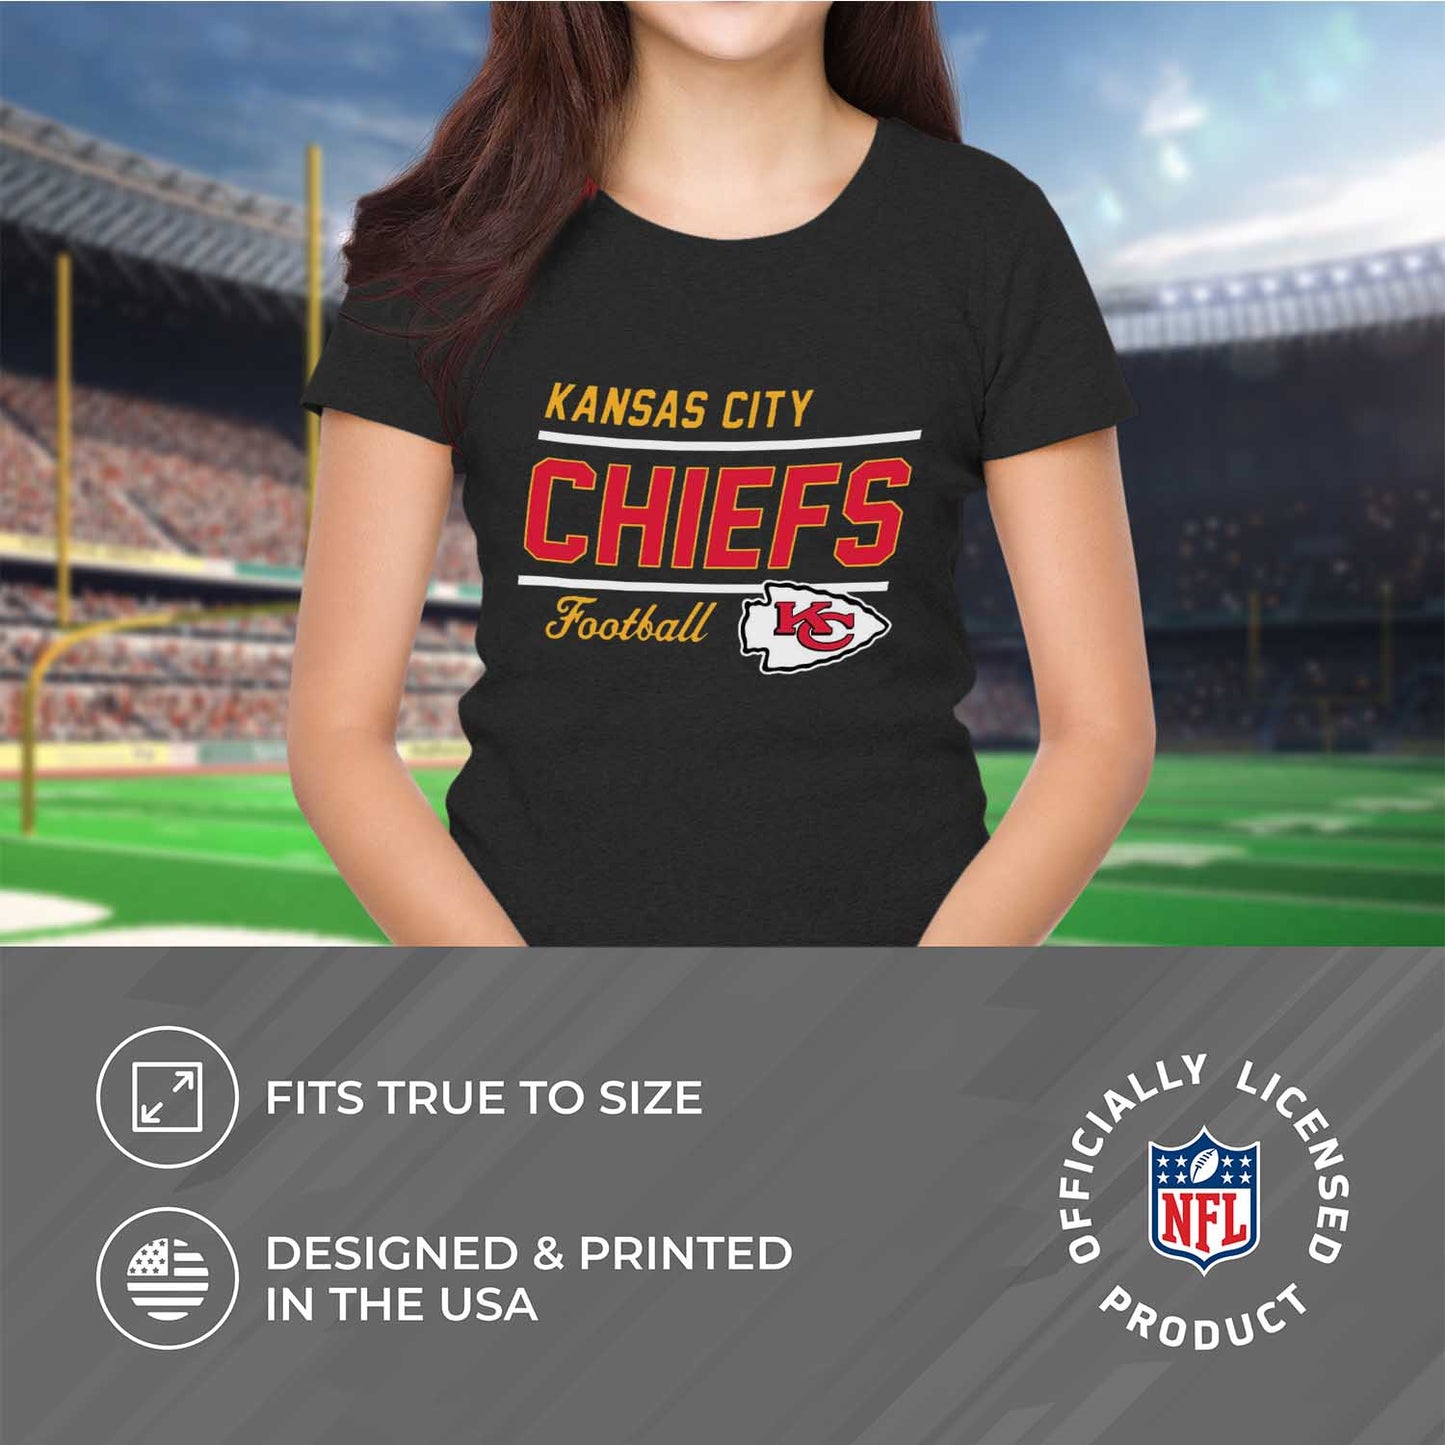 Kansas City Chiefs NFL Gameday Women's Relaxed Fit T-shirt - Black